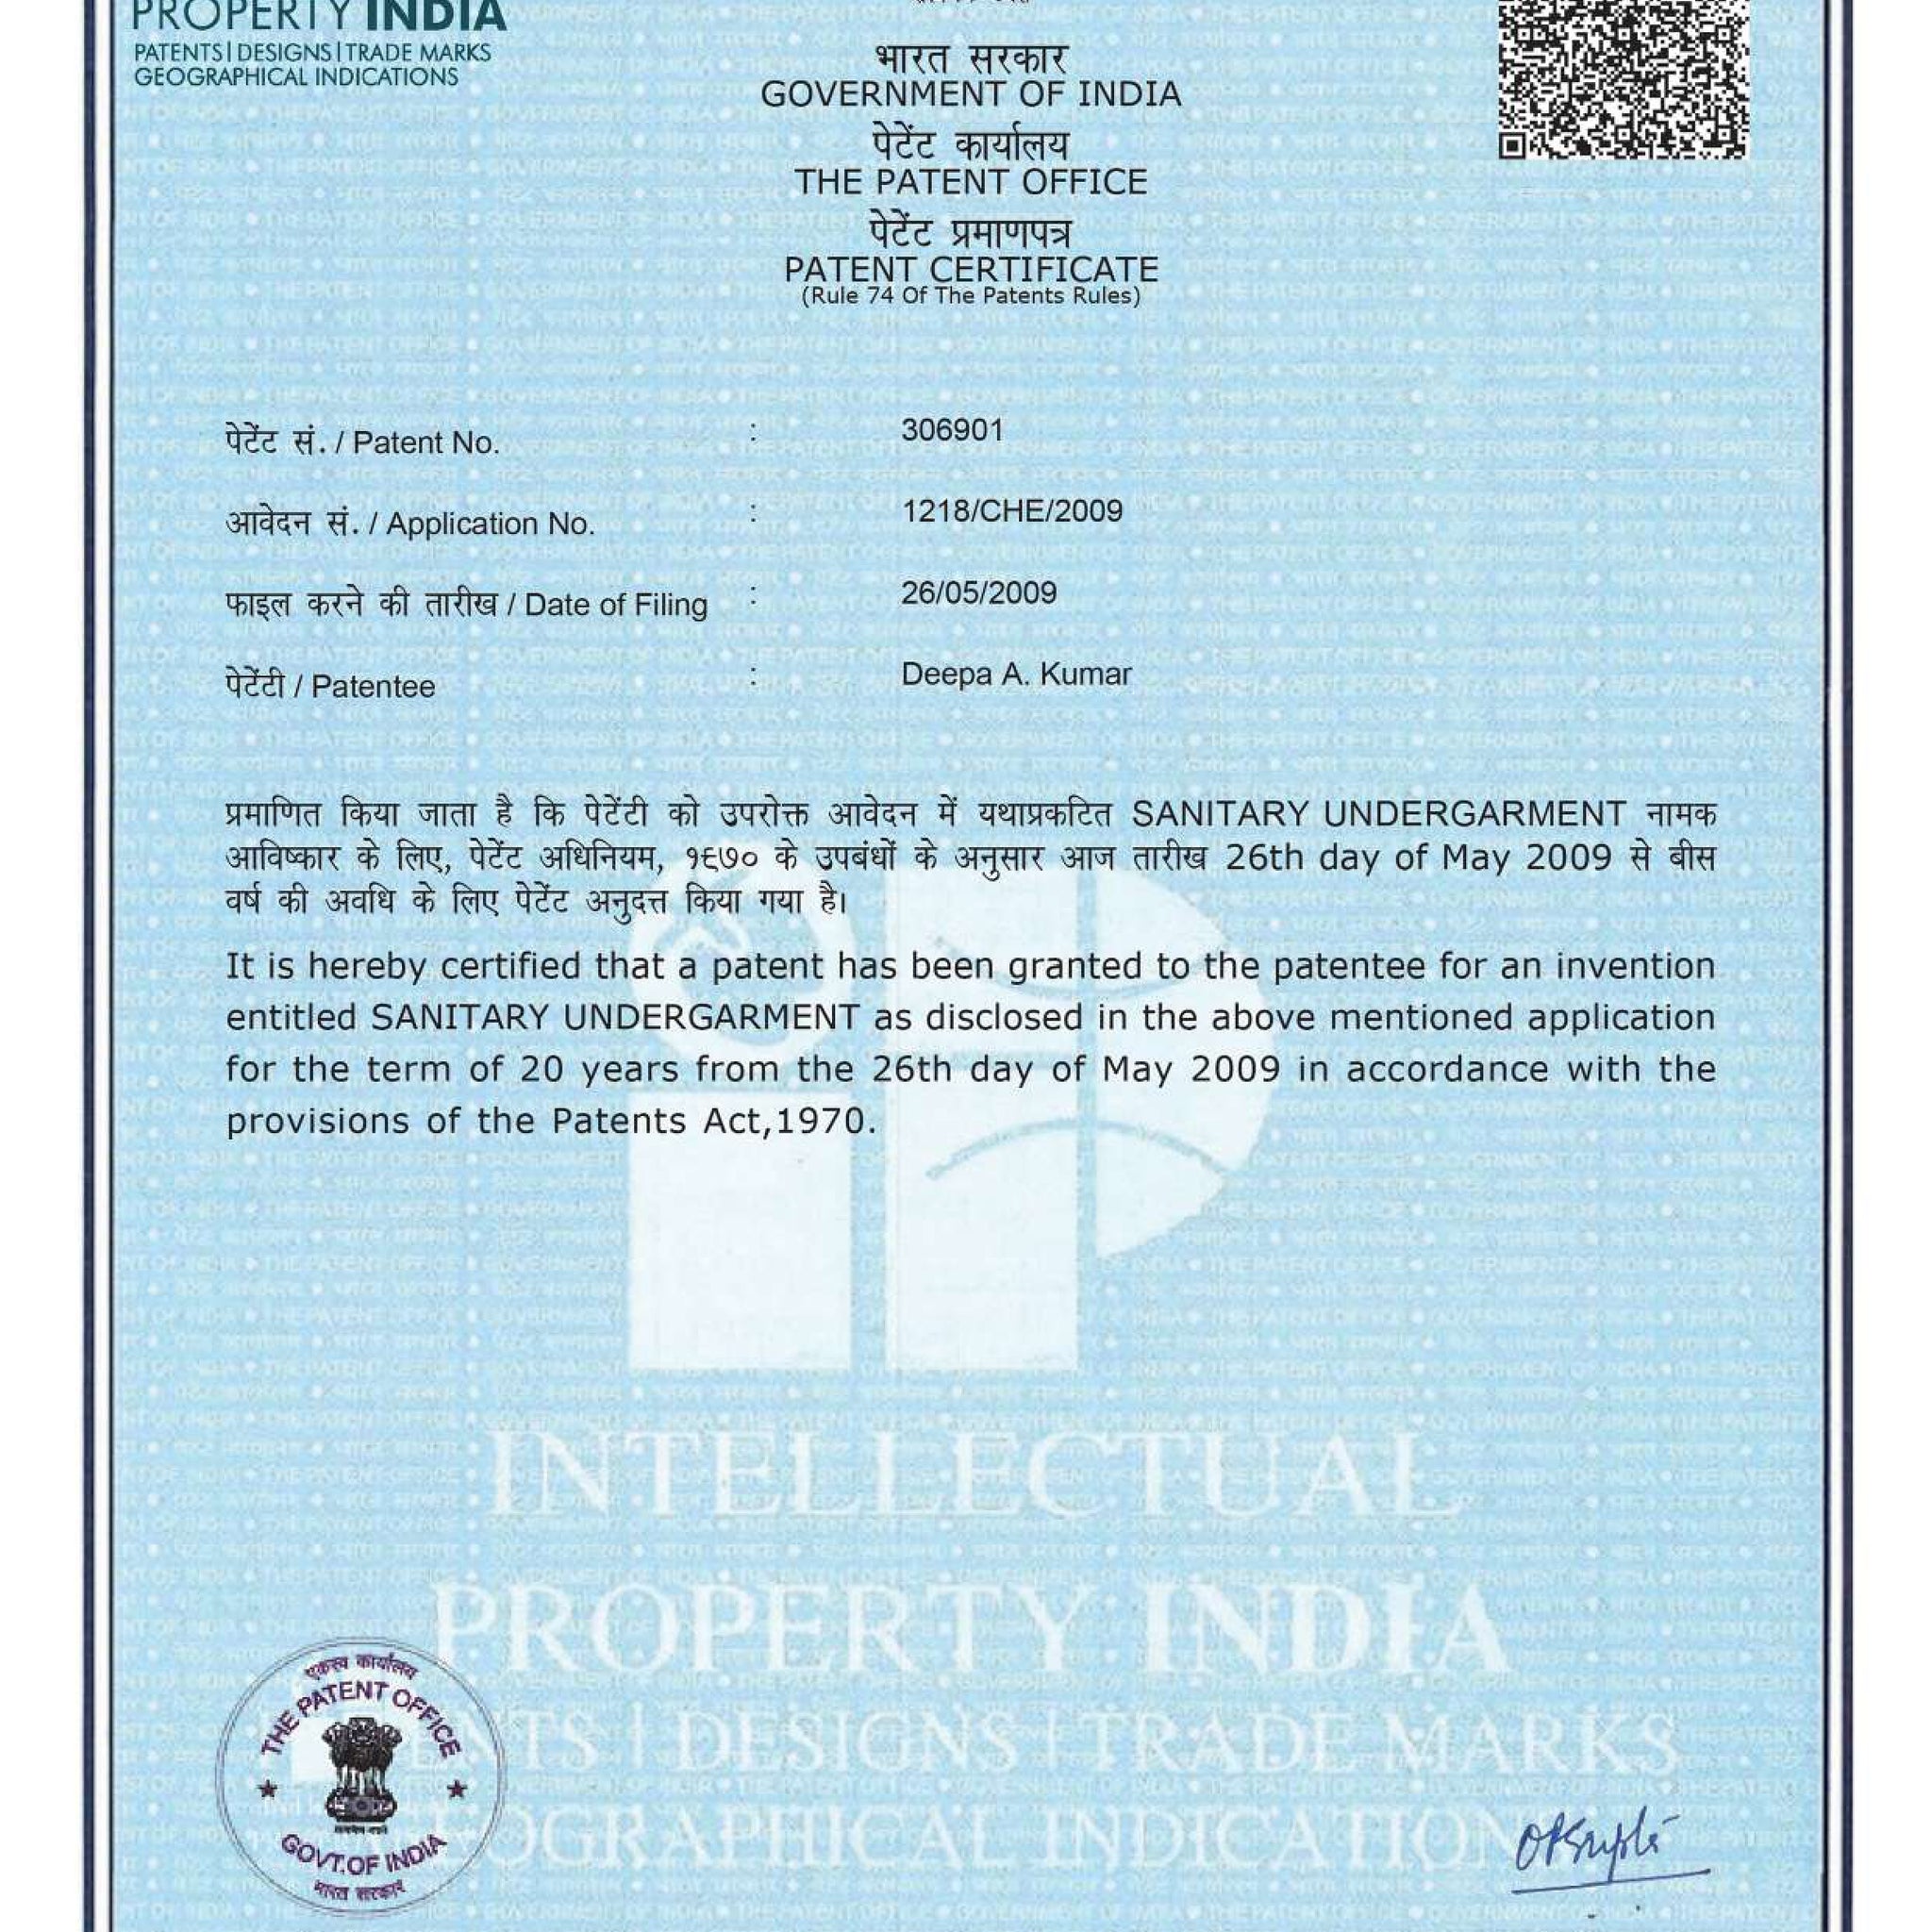 Adira's INDIA Patent Certificate for Sanitary Undergarments